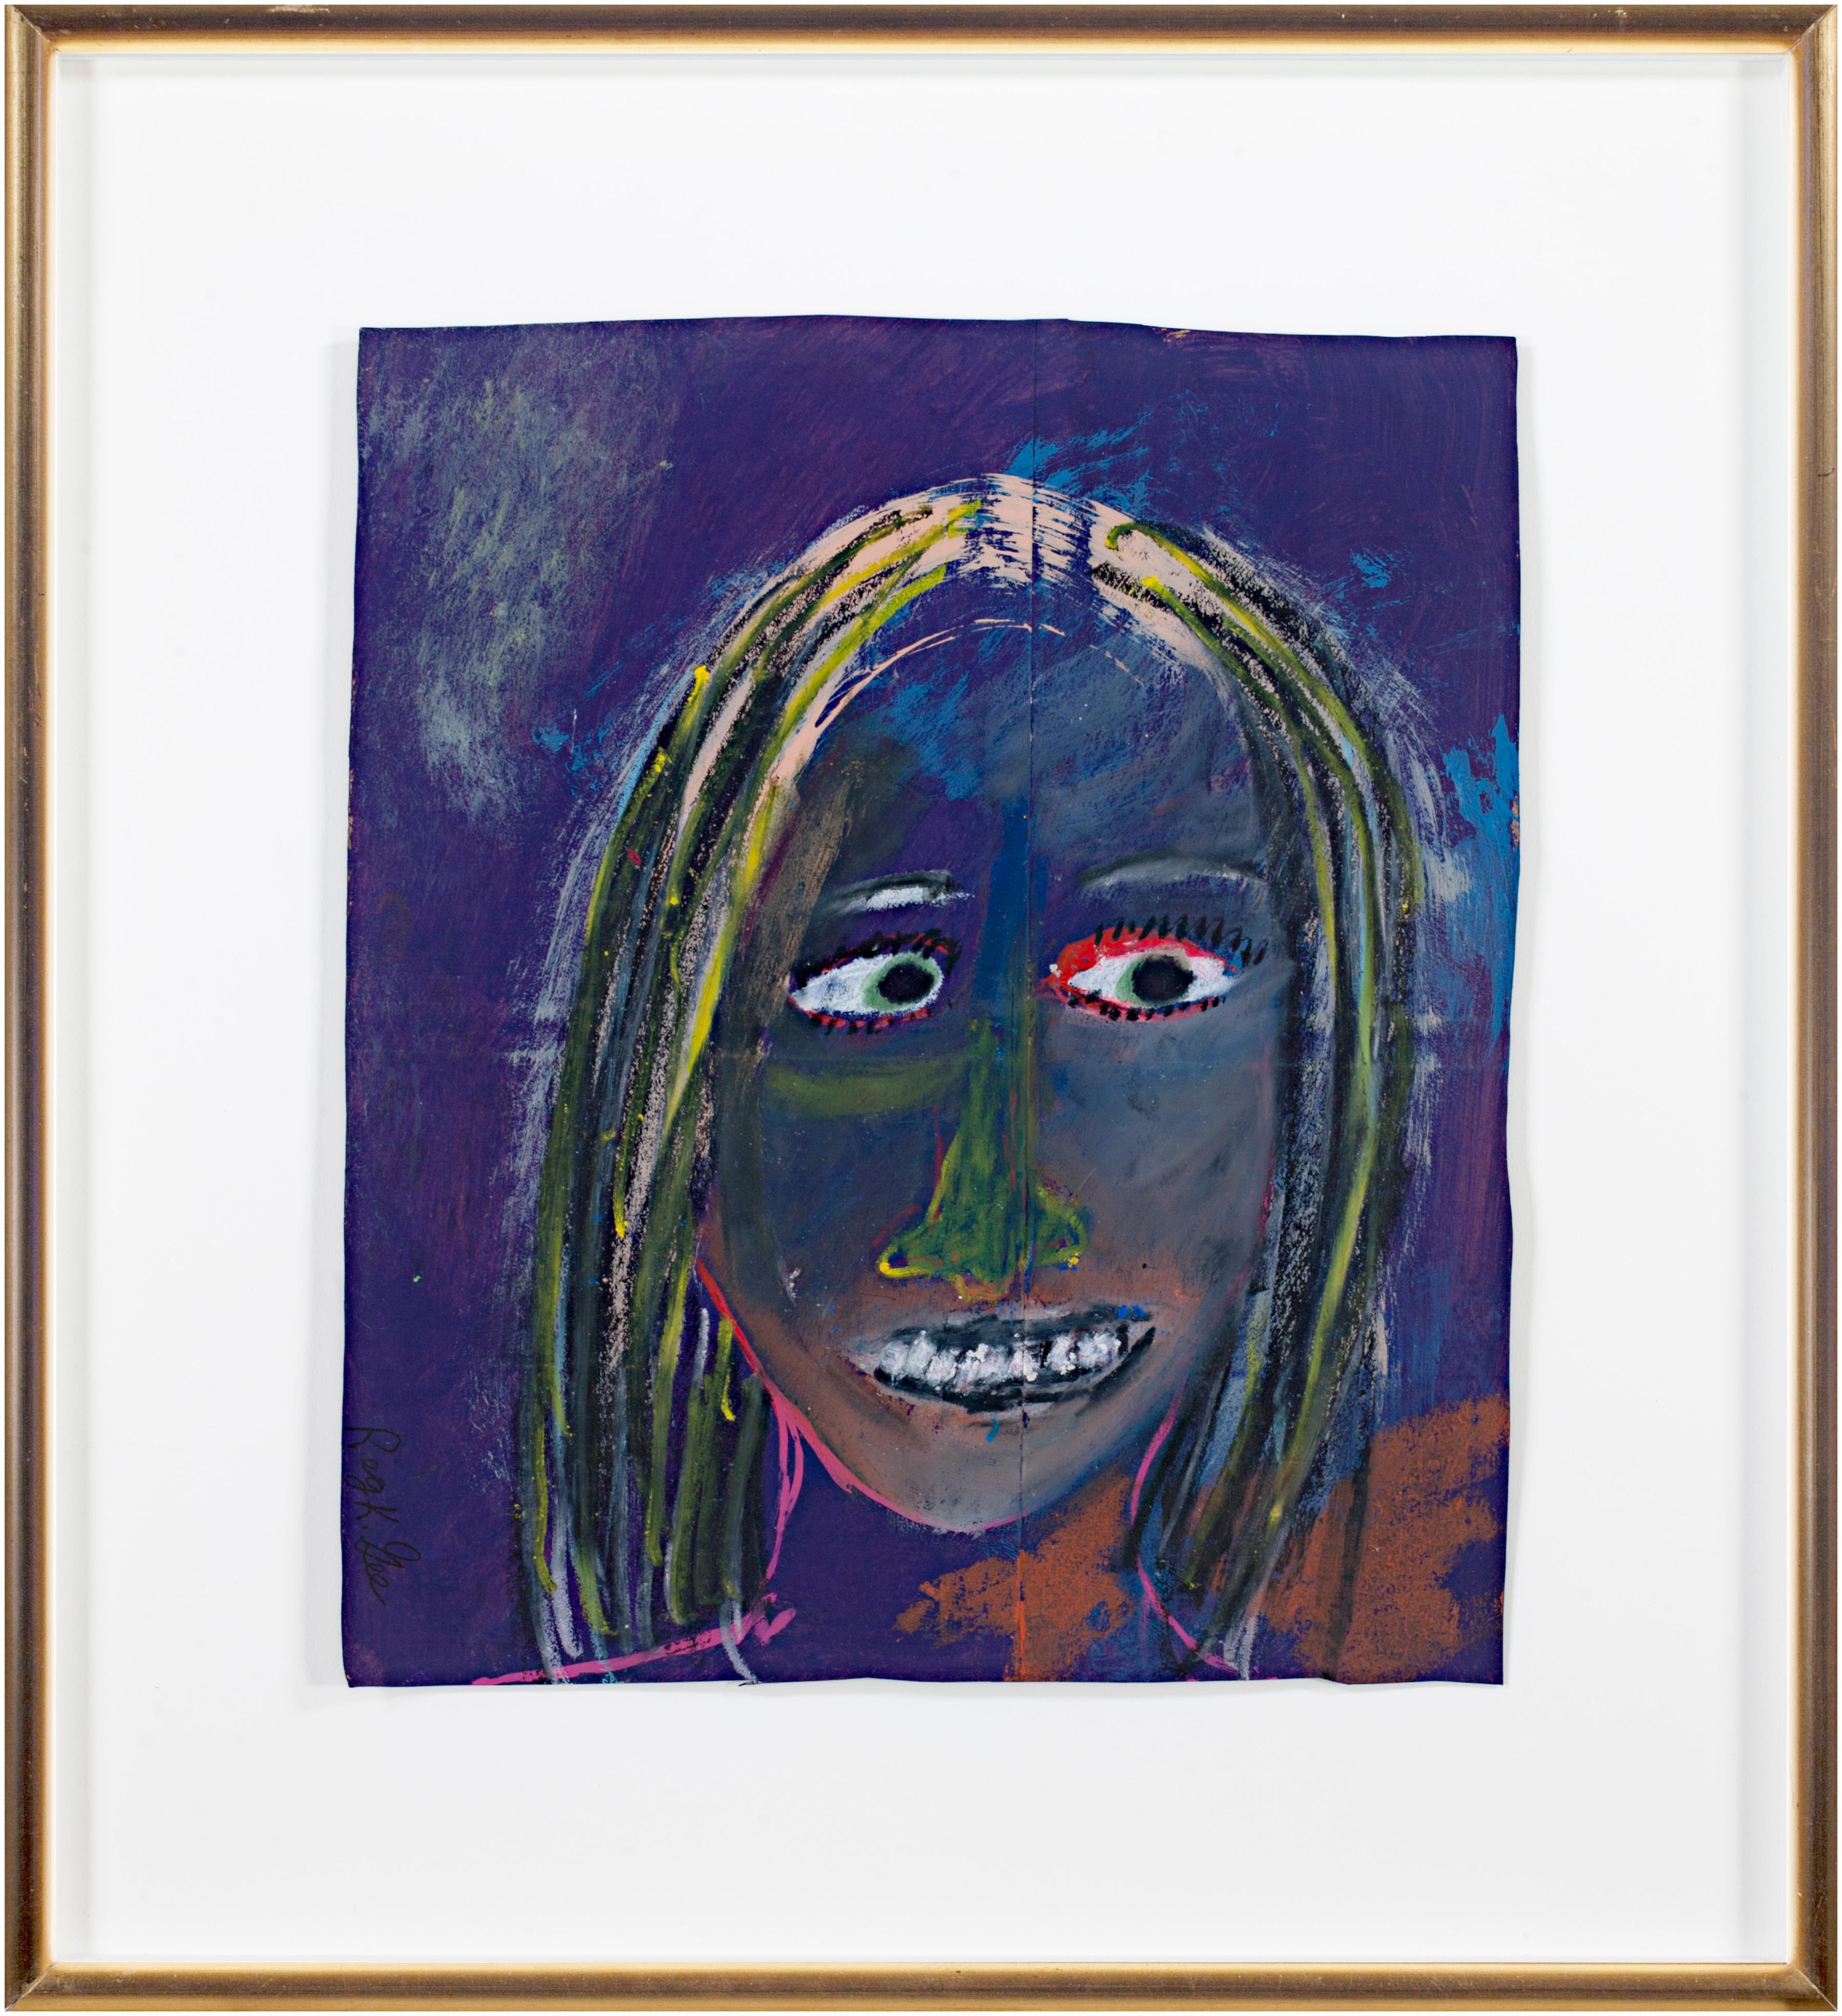 Reginald K. Gee Figurative Art - 'Deep Blue With Pamela' original signed pastel portrait drawing purple and green